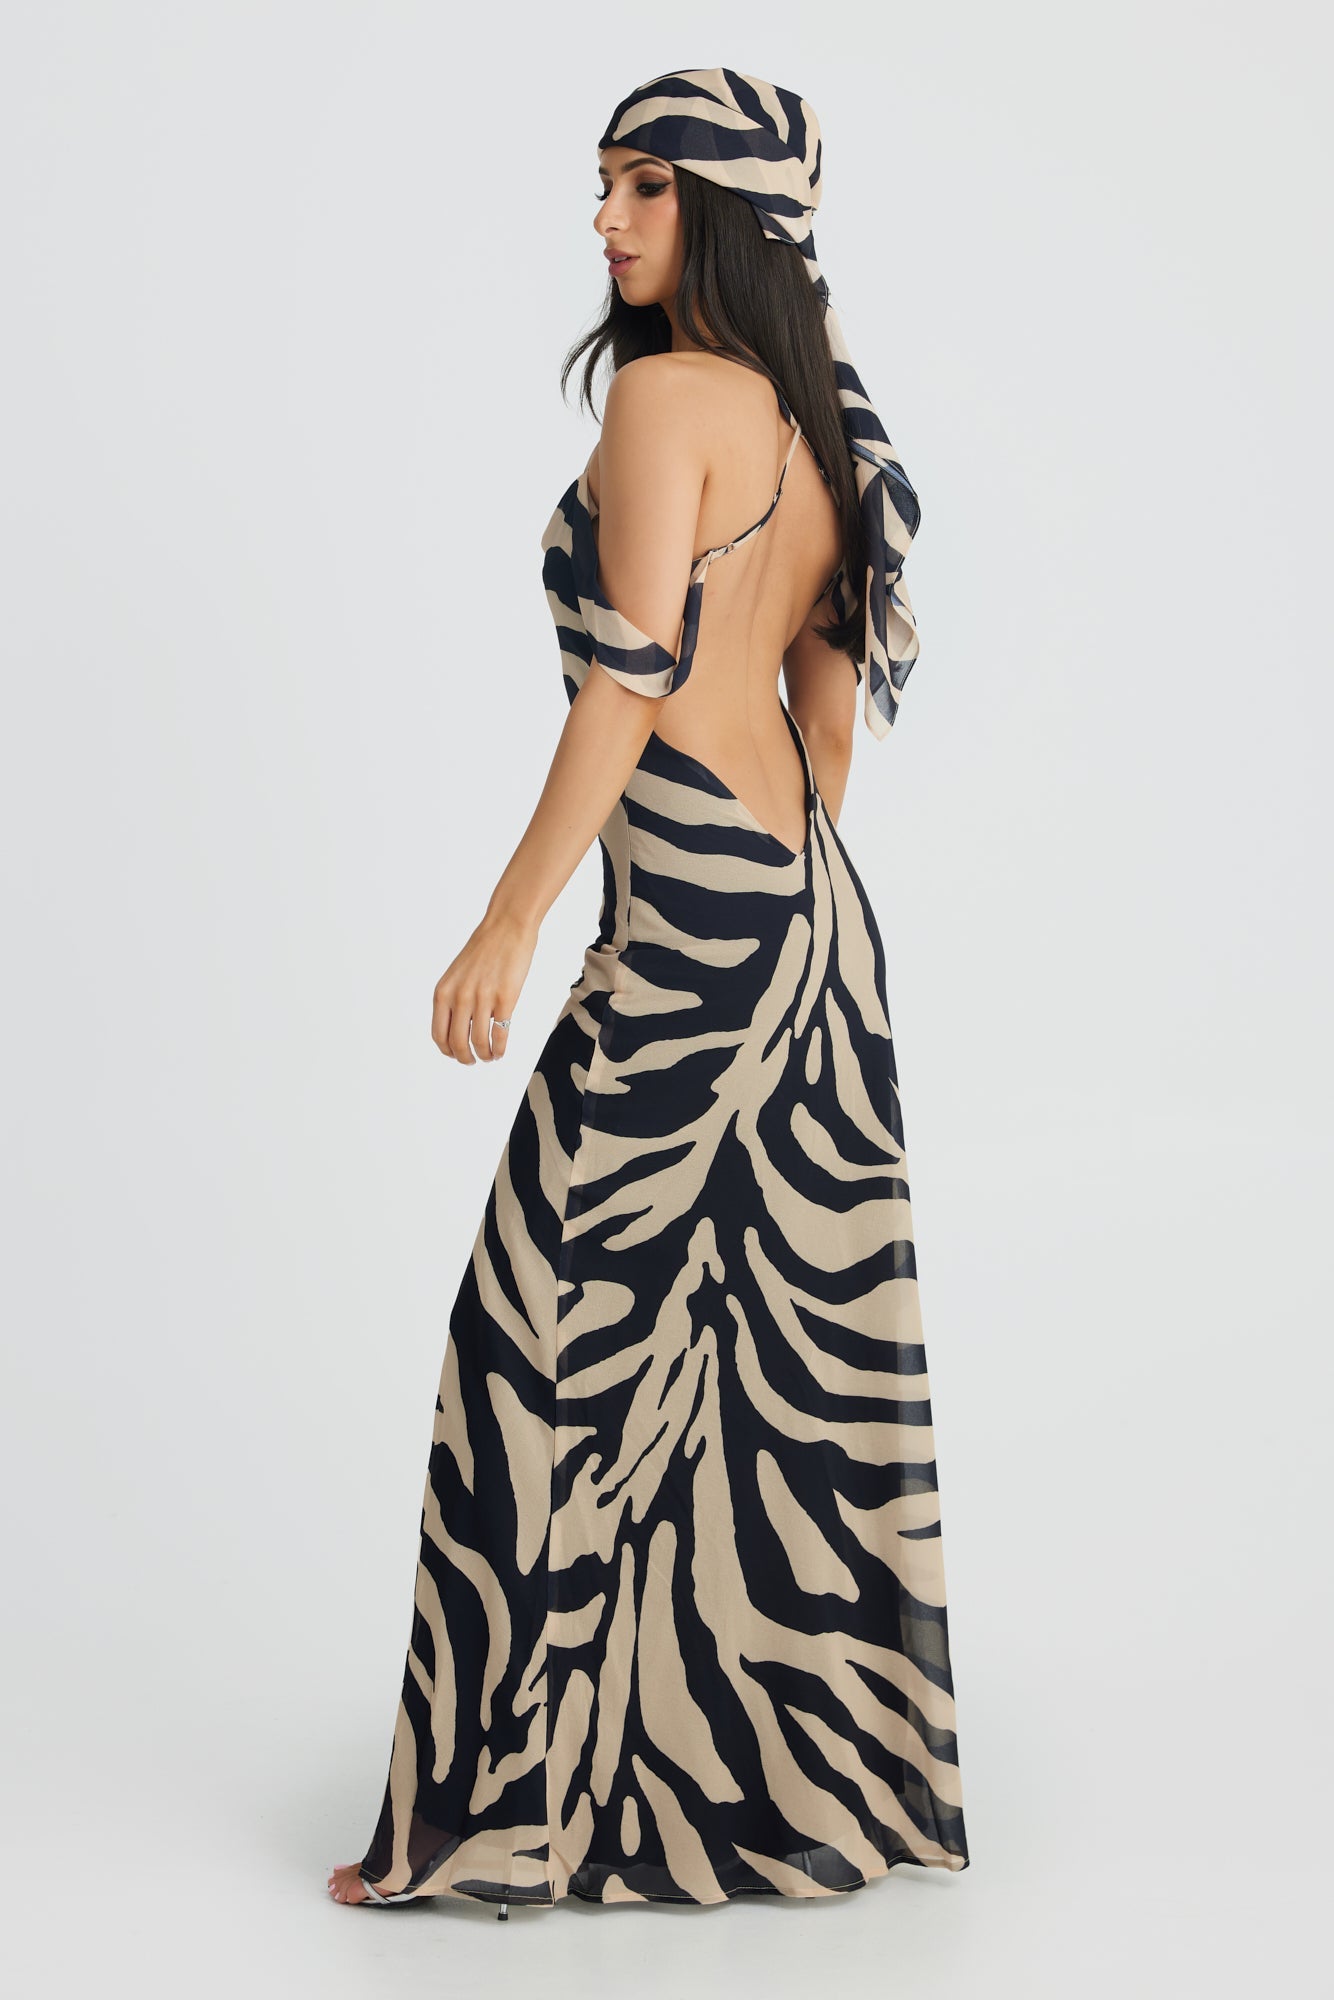 MÉLANI The Label VIENNA Zebra Low Back Chiffon Maxi Dress